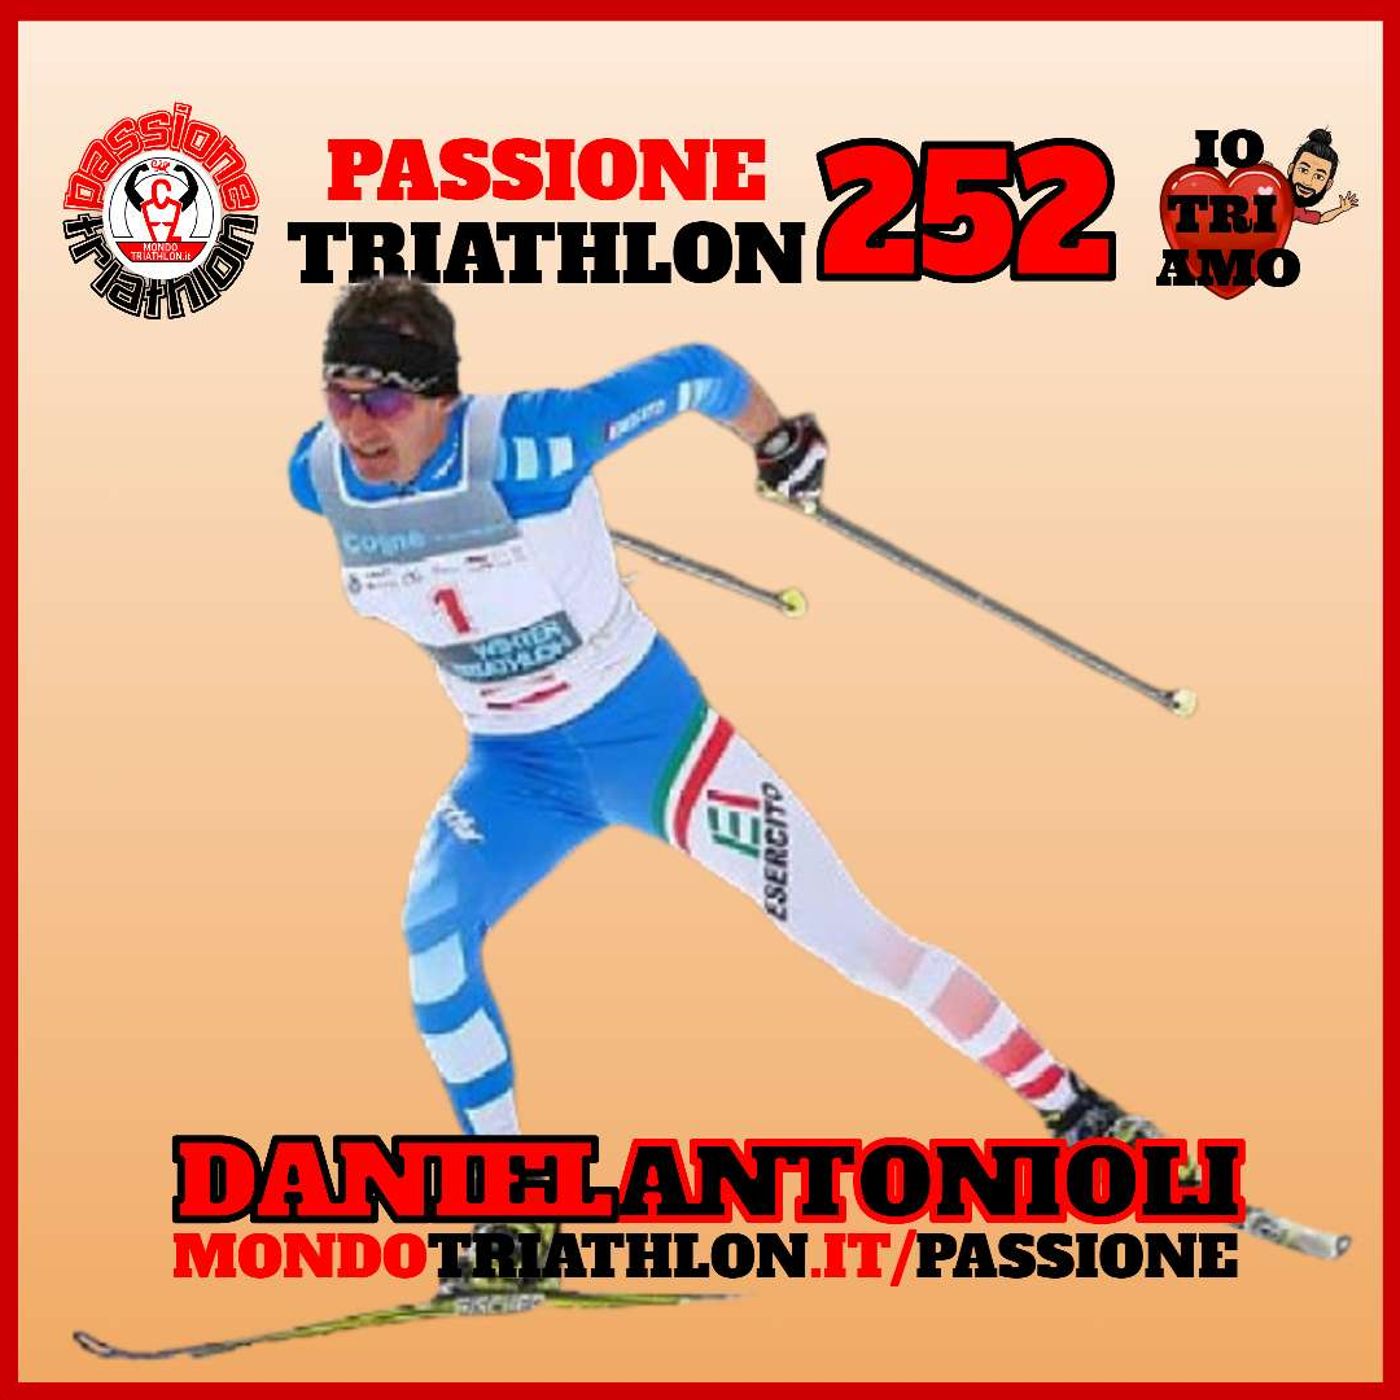 Passione Triathlon n° 252 🏊🚴🏃💗 Daniel Antonioli